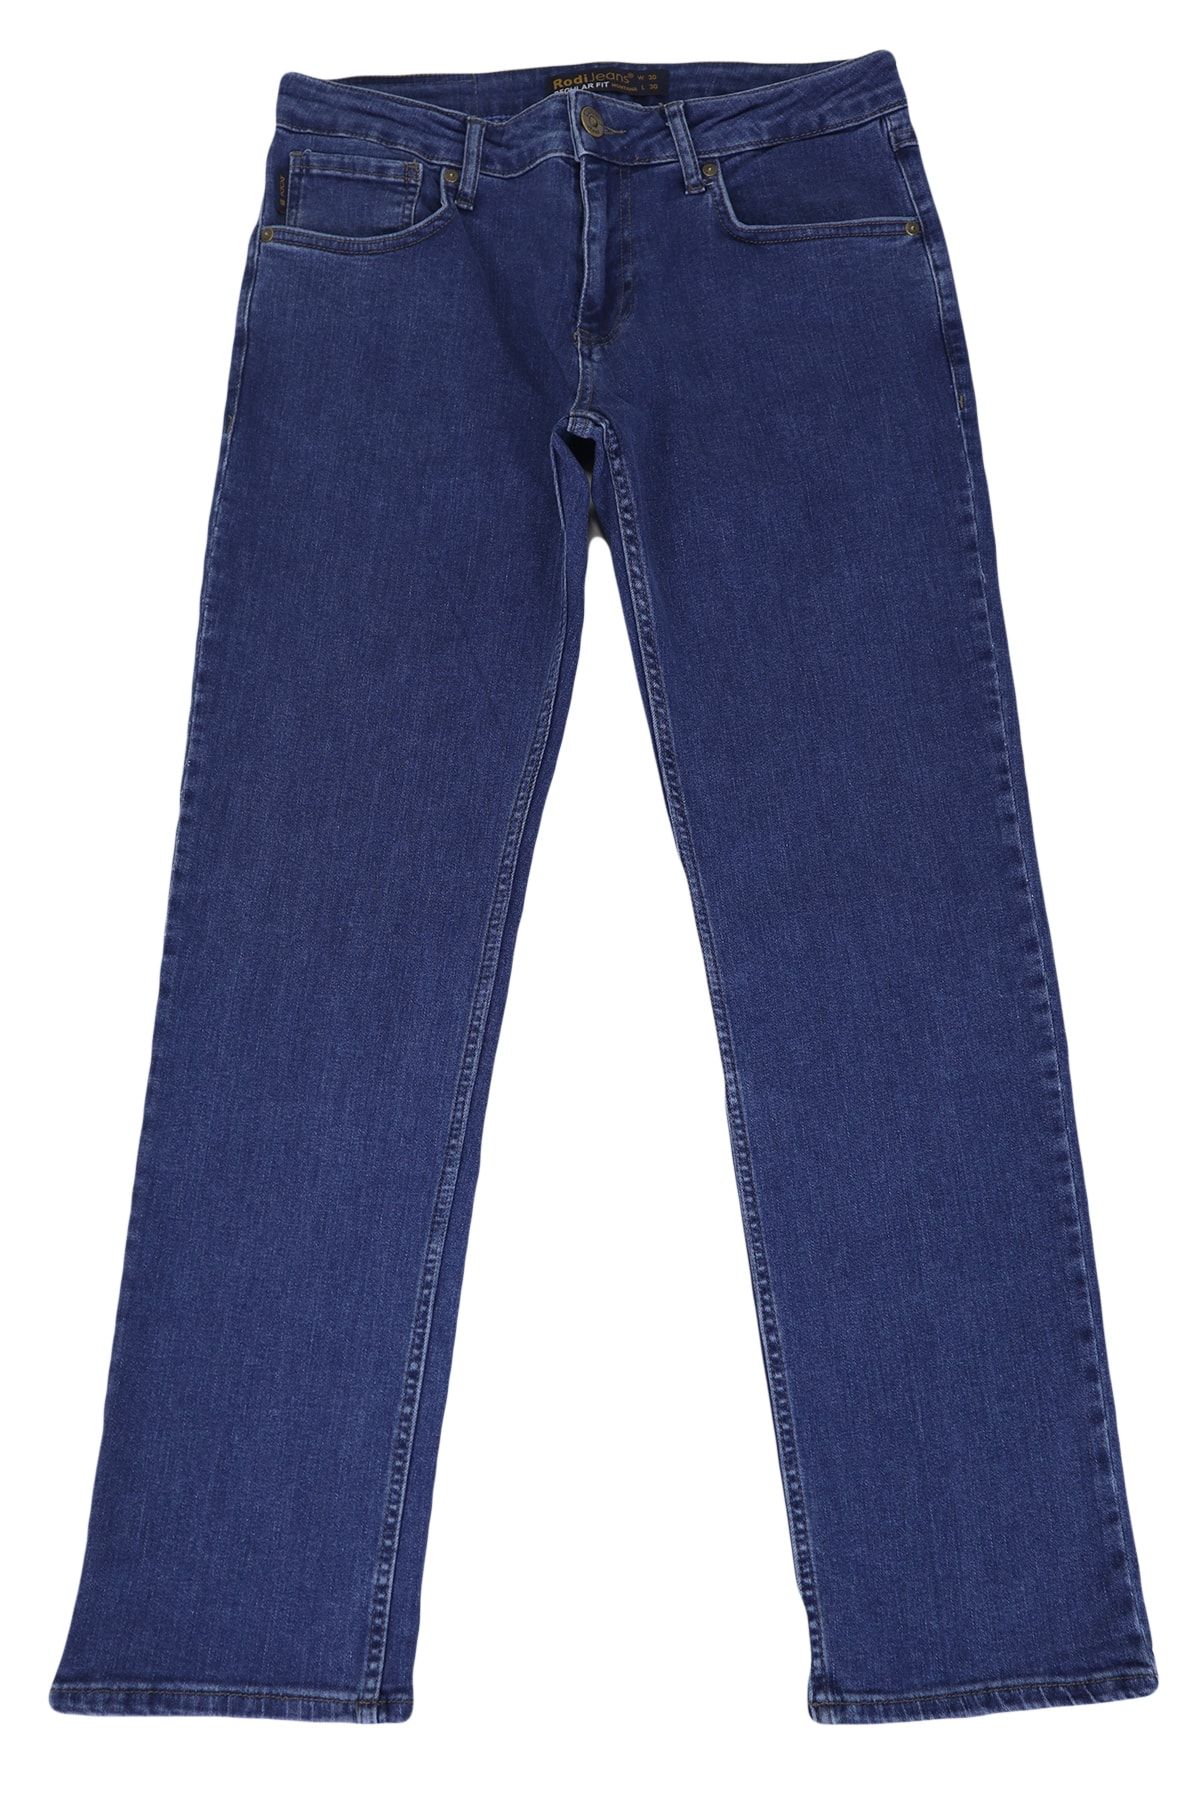 Rodi Jeans Fistan Store Erkek Koyu Mavi Yüksek Bel Rahat Kesim Boru Paça Jean Pantolon